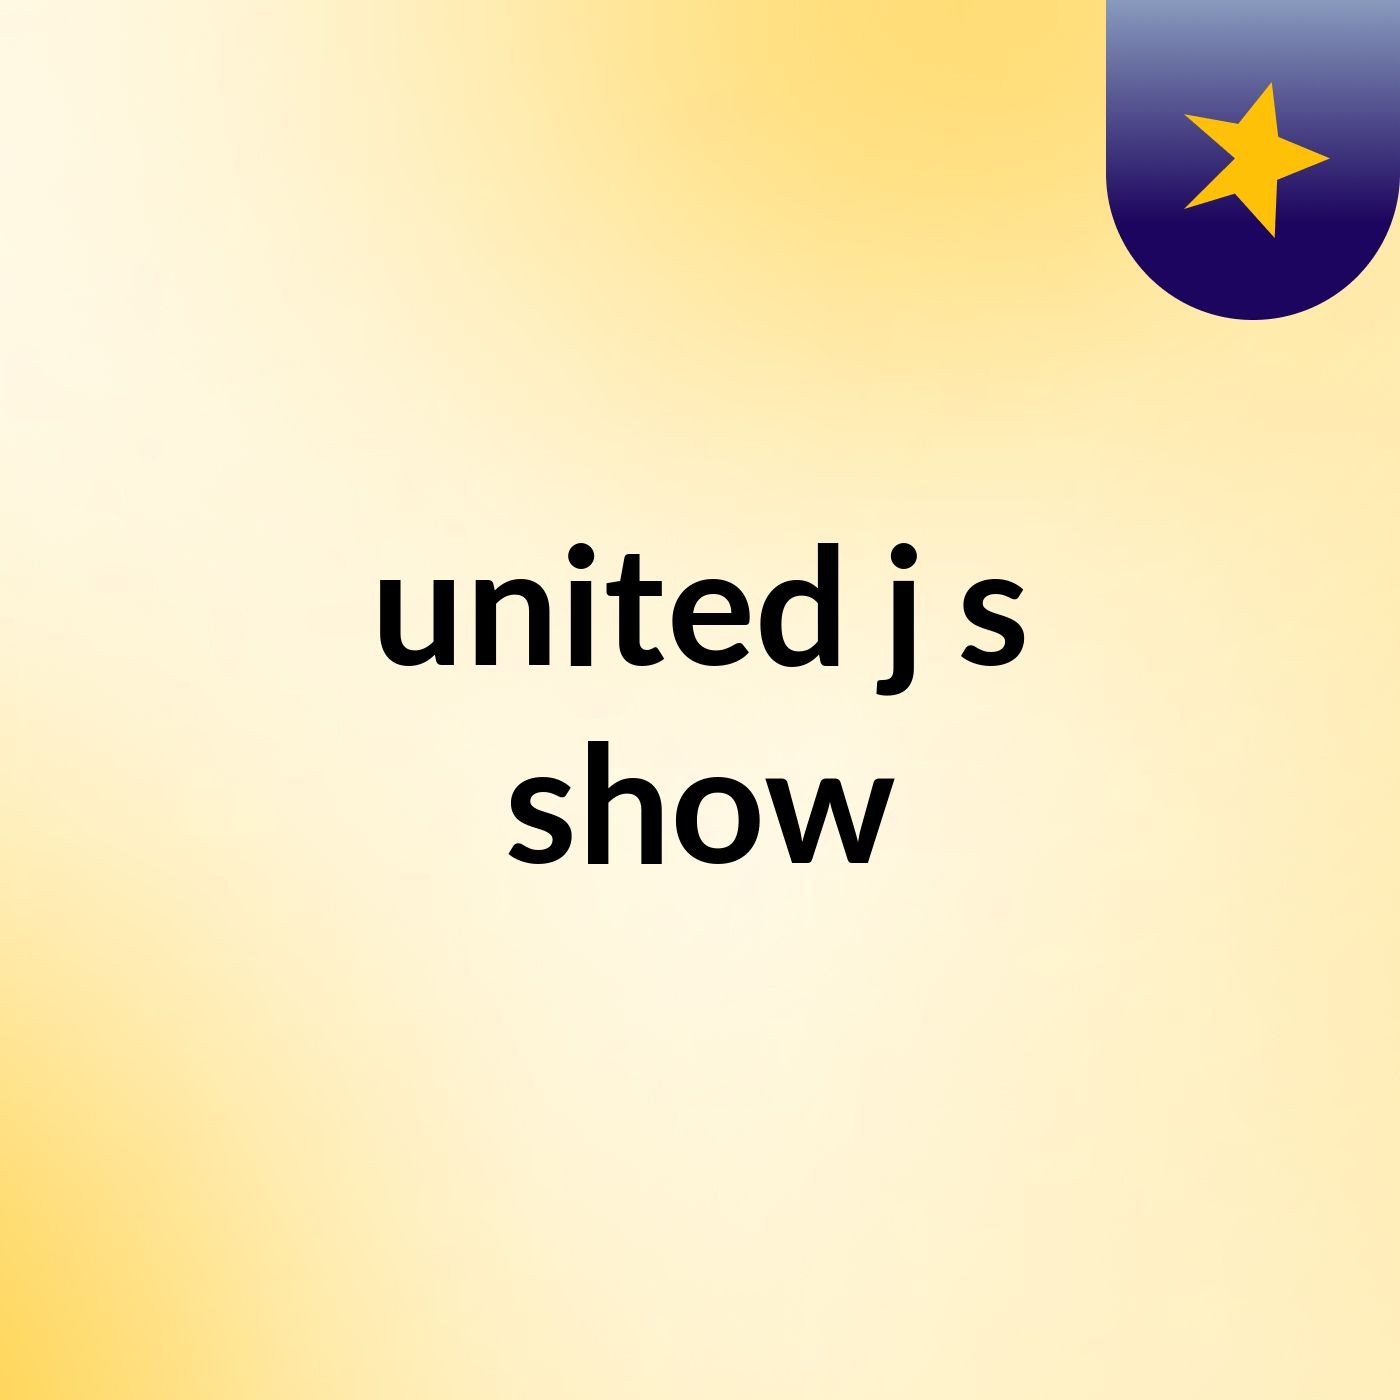 united j's show